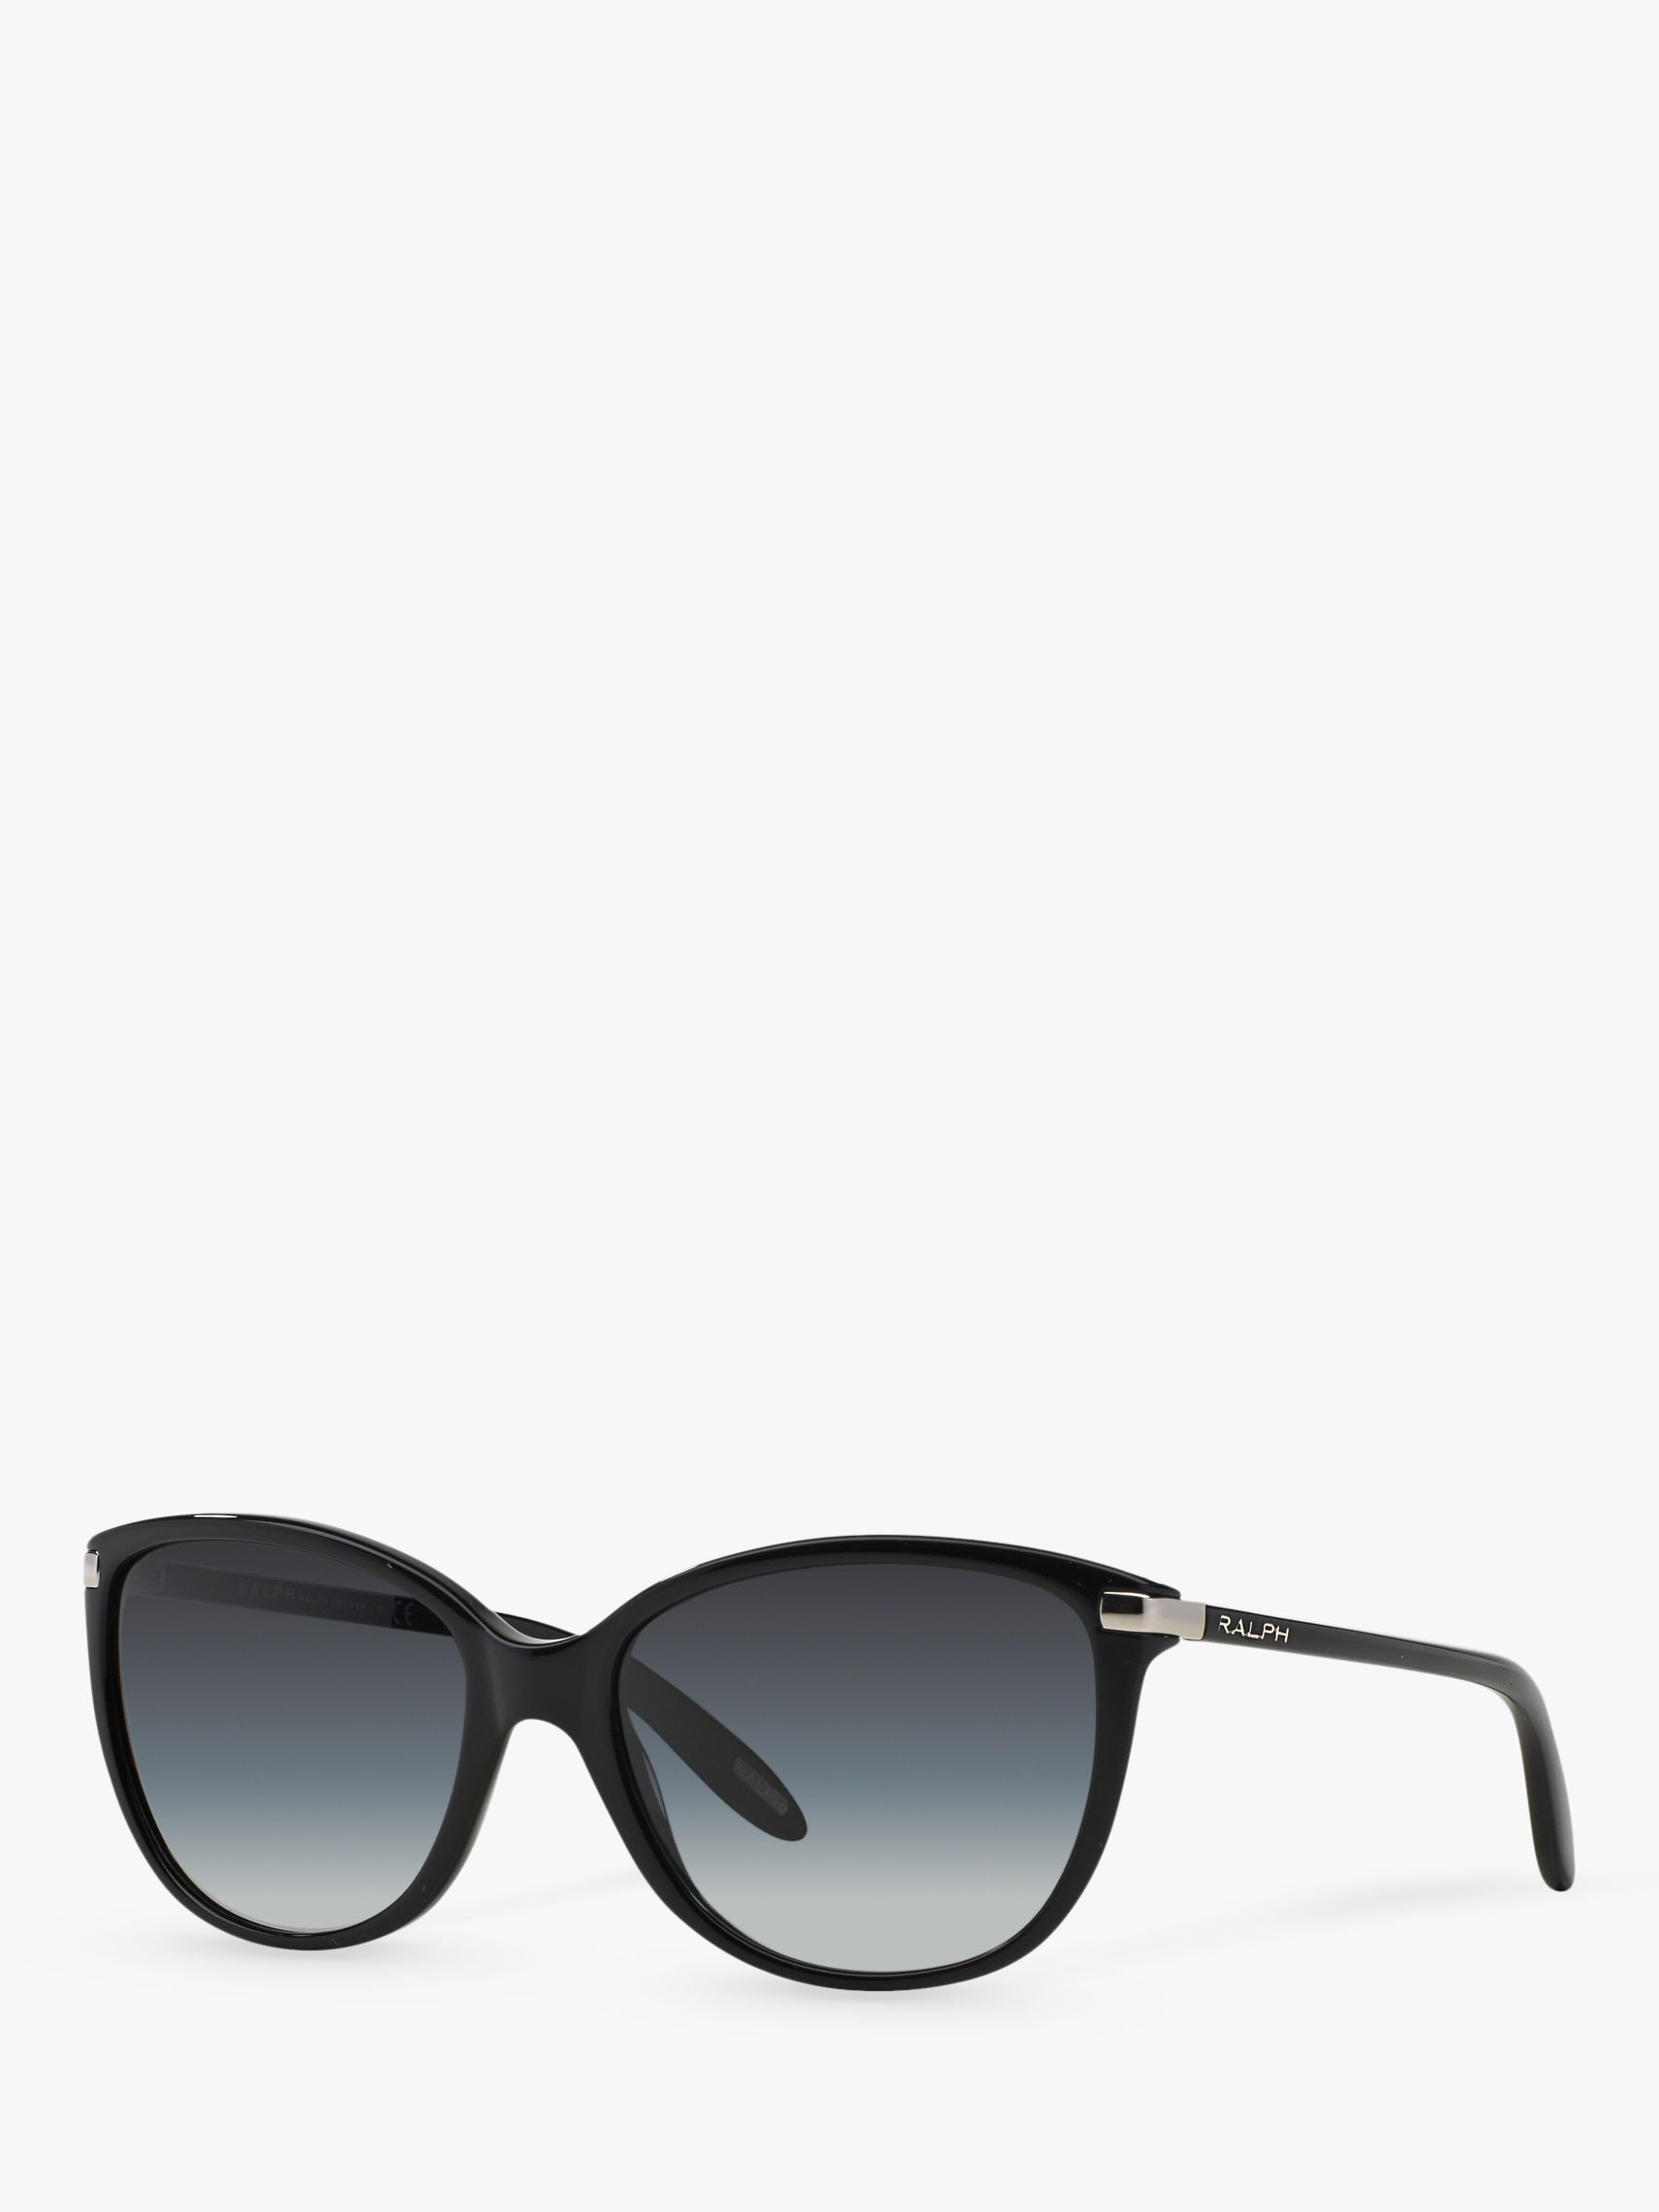 Polo Ralph Lauren RA5160 Women's Cat's Eye Sunglasses, Black/Grey at ...